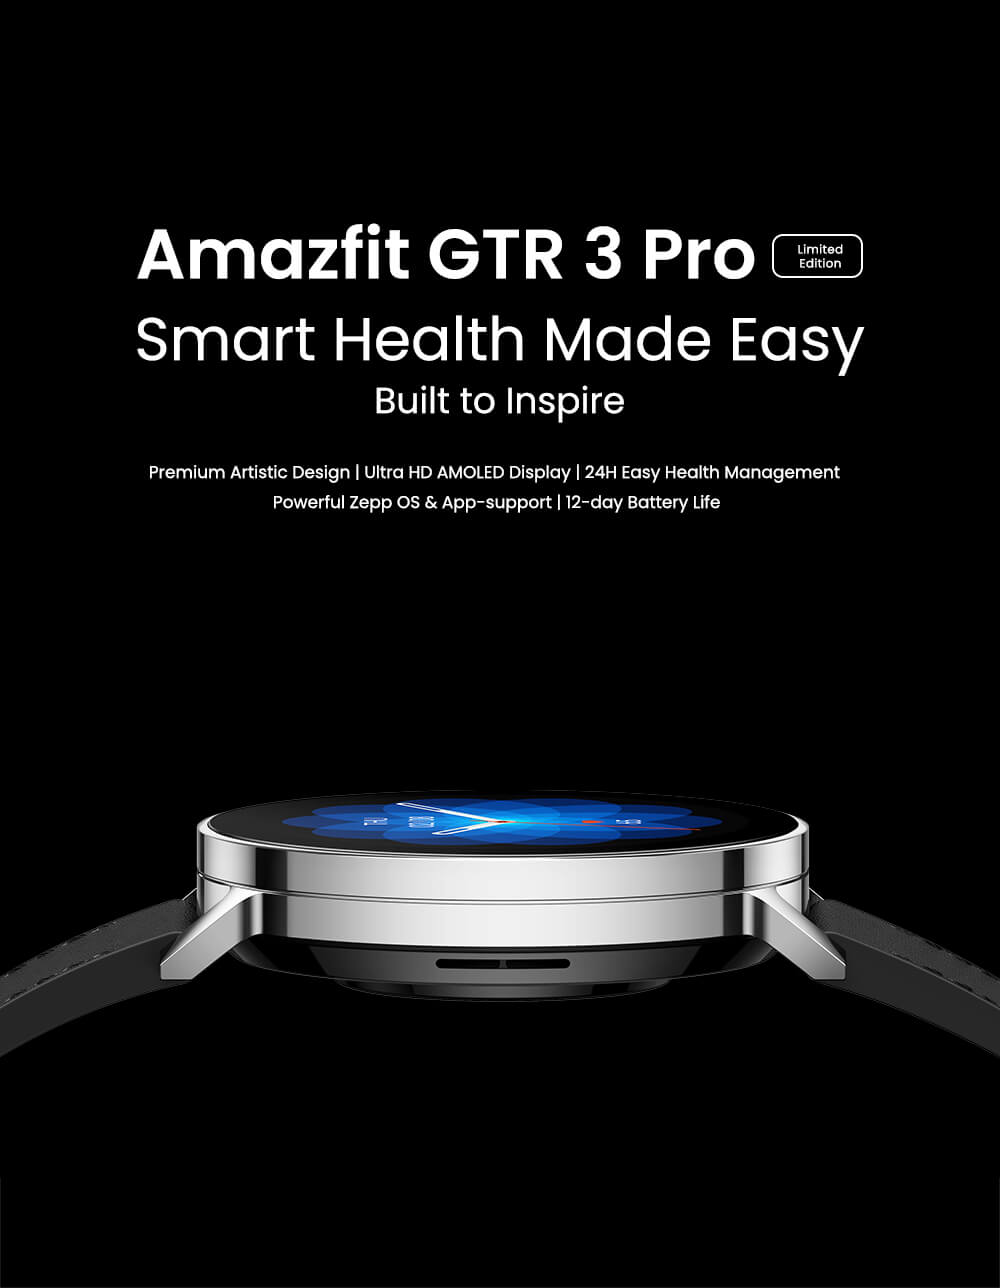 Amazfit GTR 3 Pro, Amazfit GTS 3 And Amazfit GTR 3 Getting Major Update.  Details